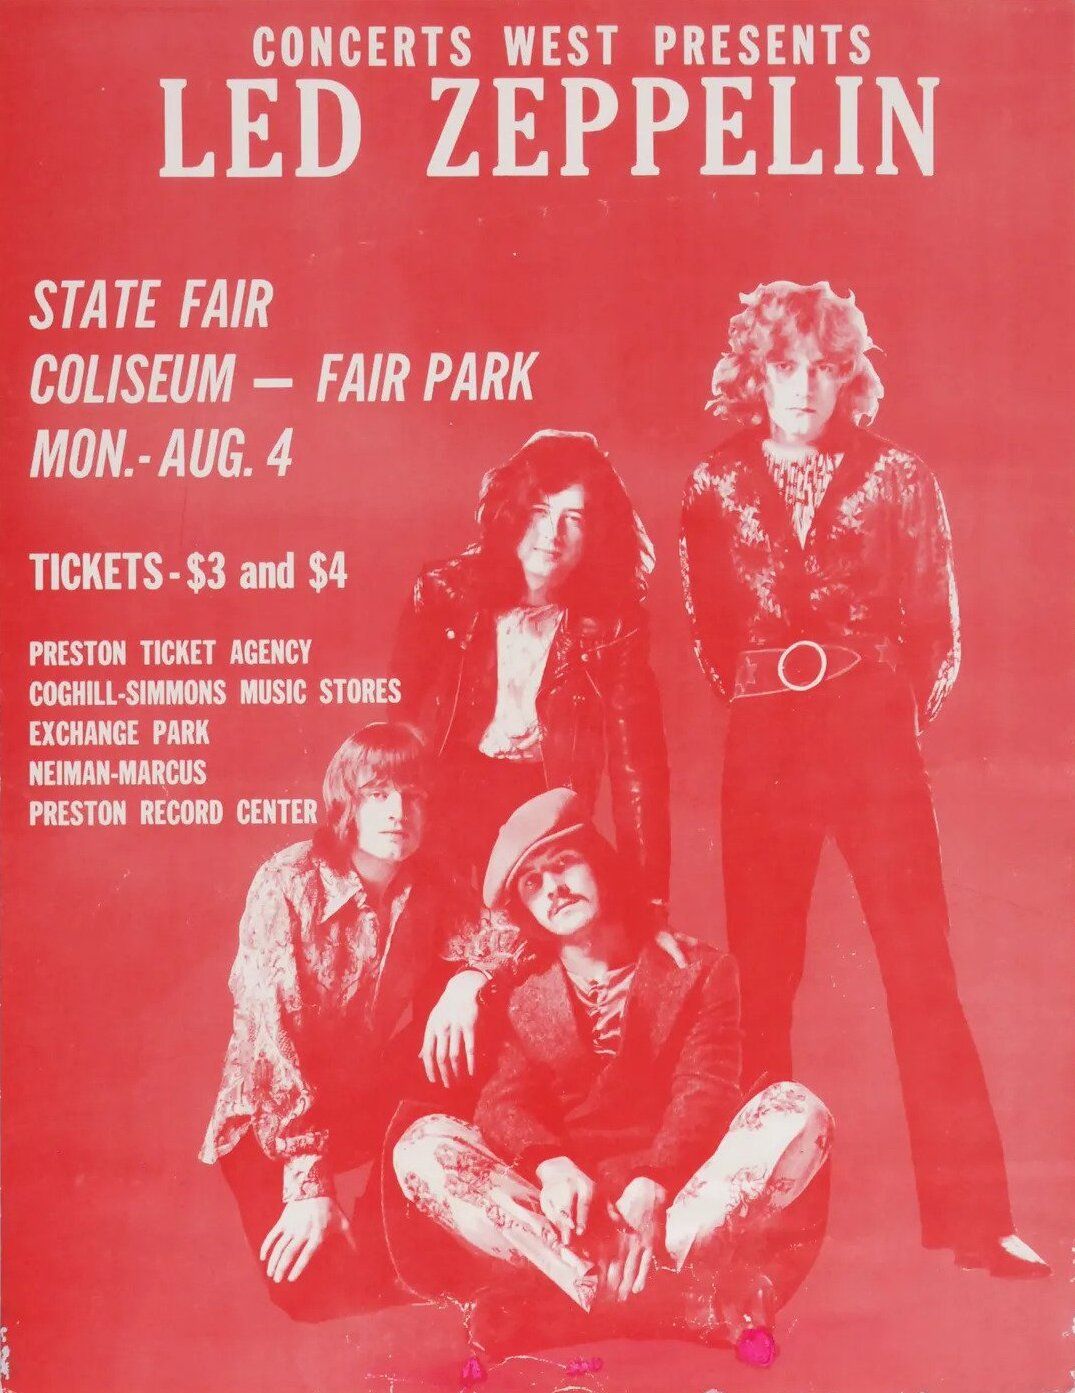 Led Zeppelin Vintage Rock Band affiches et impressions par